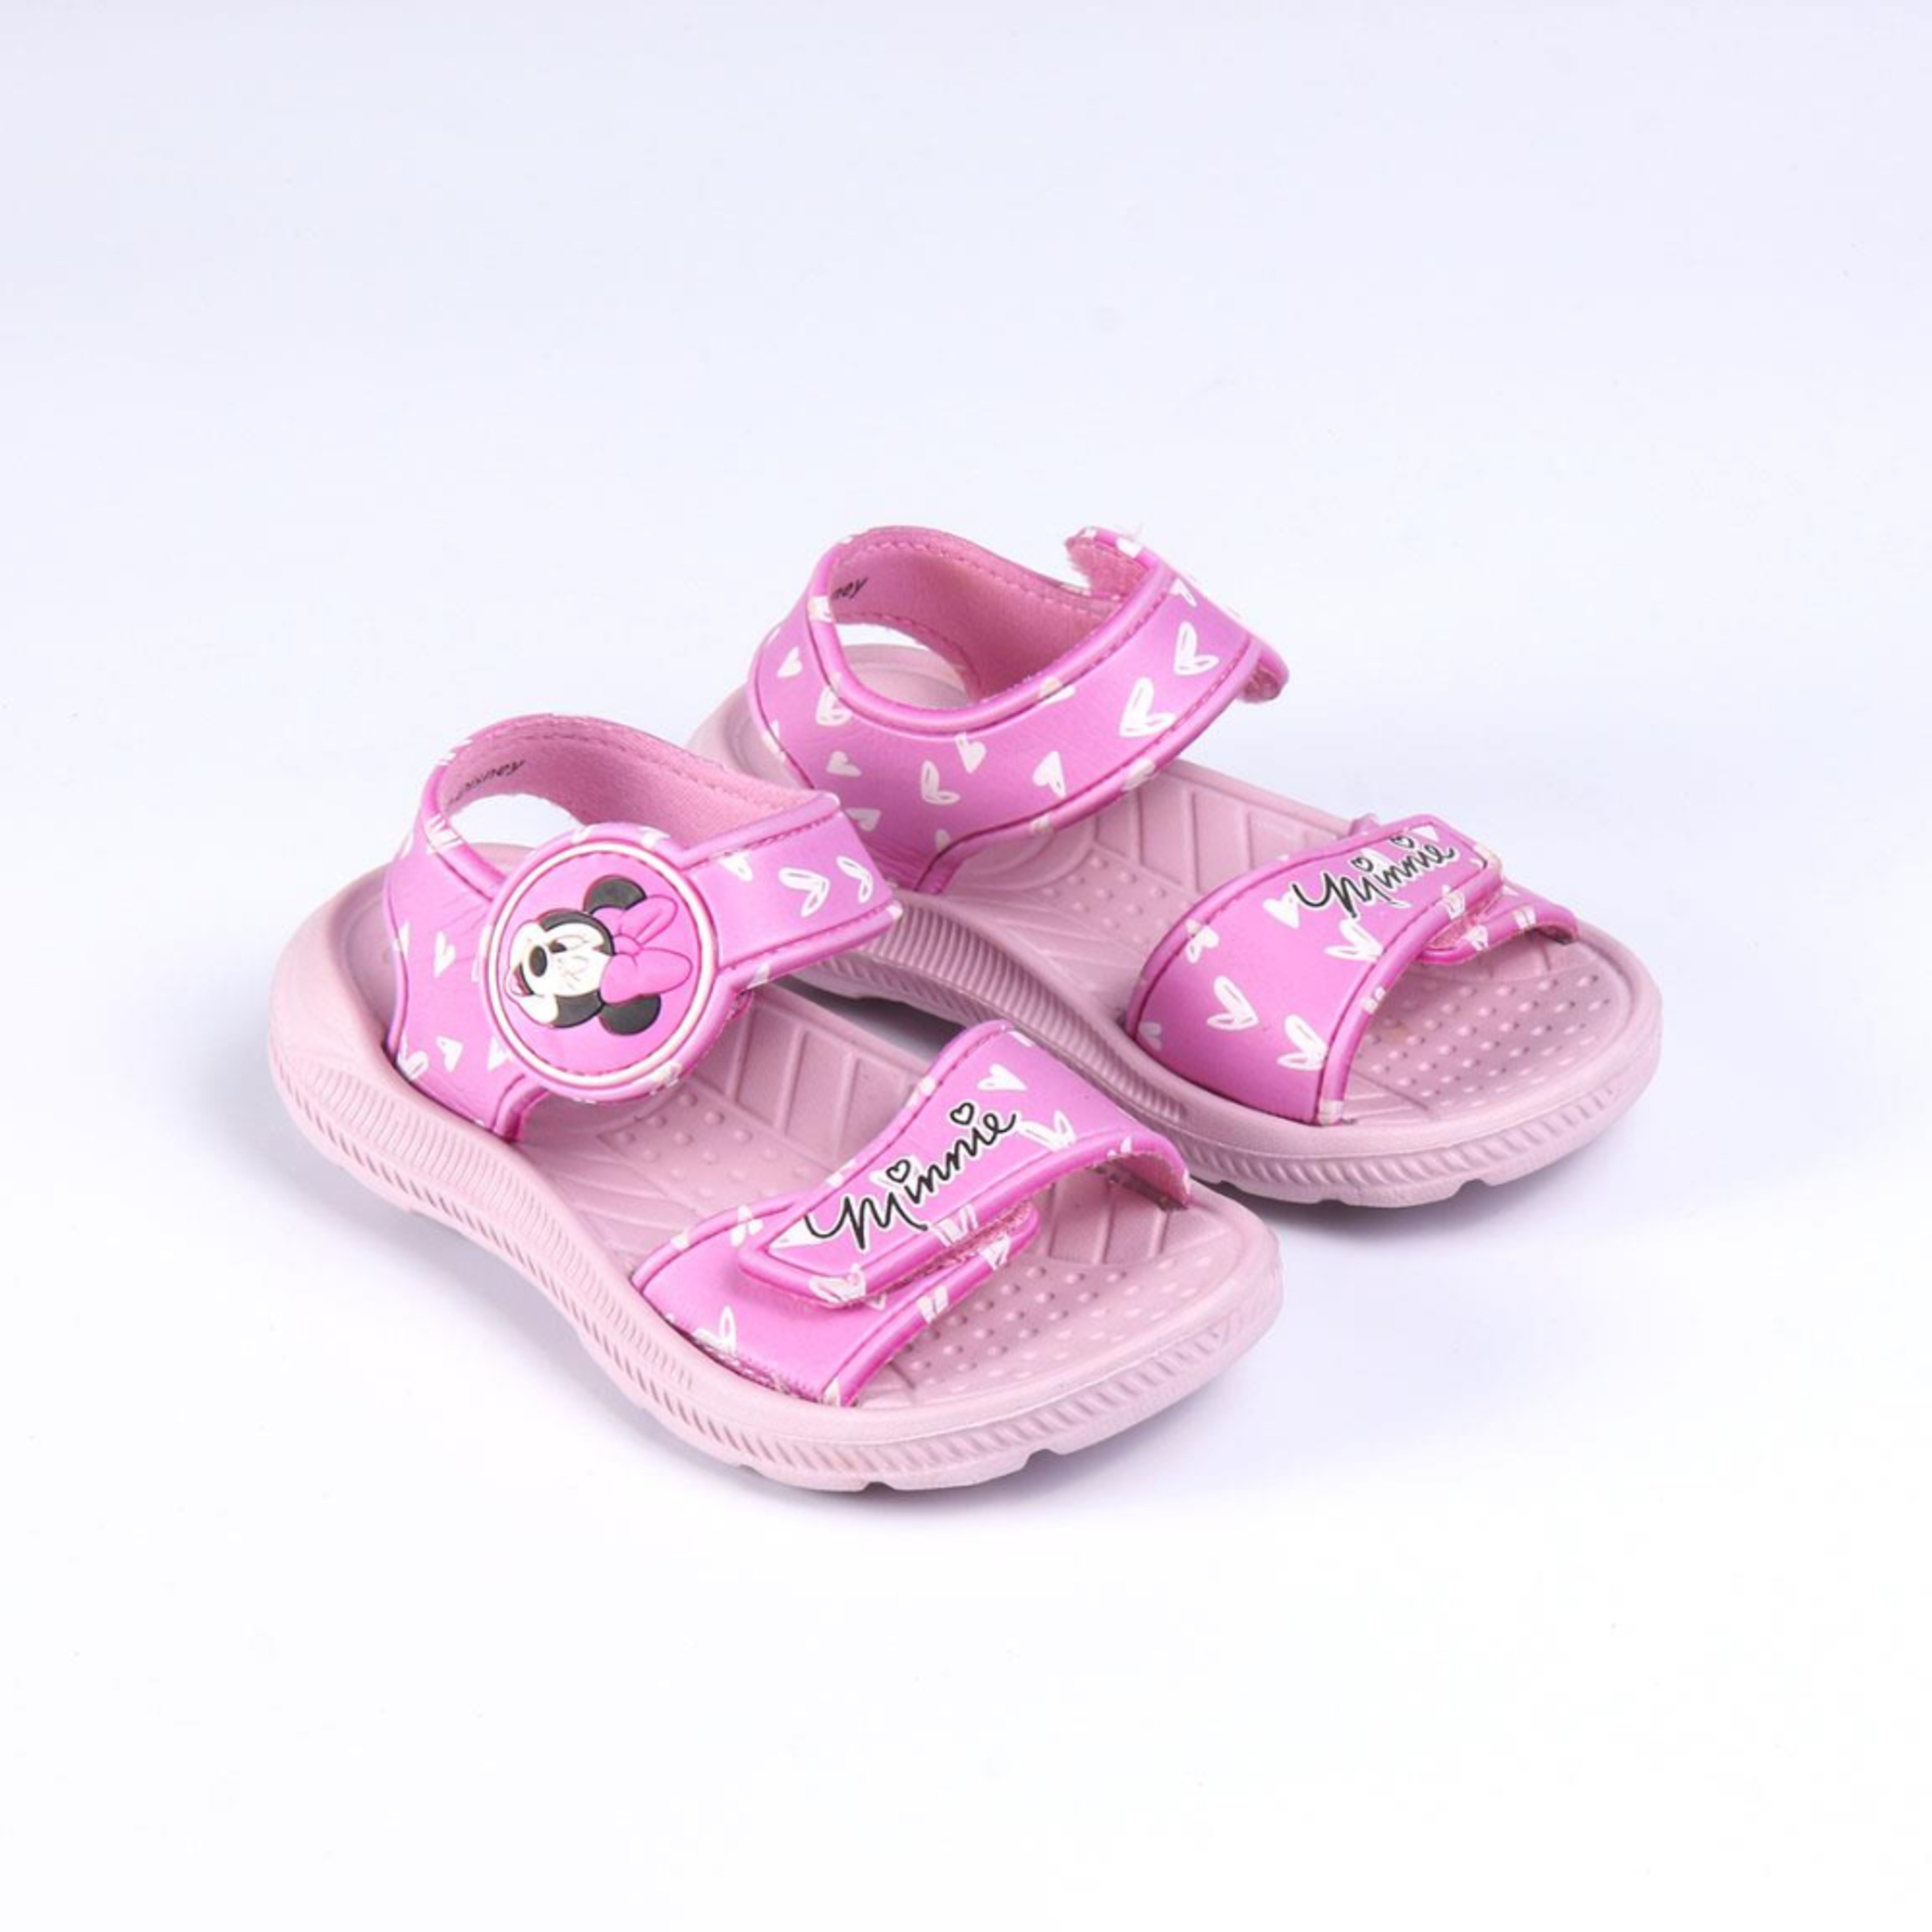 Minnie Mouse Sandals 71485